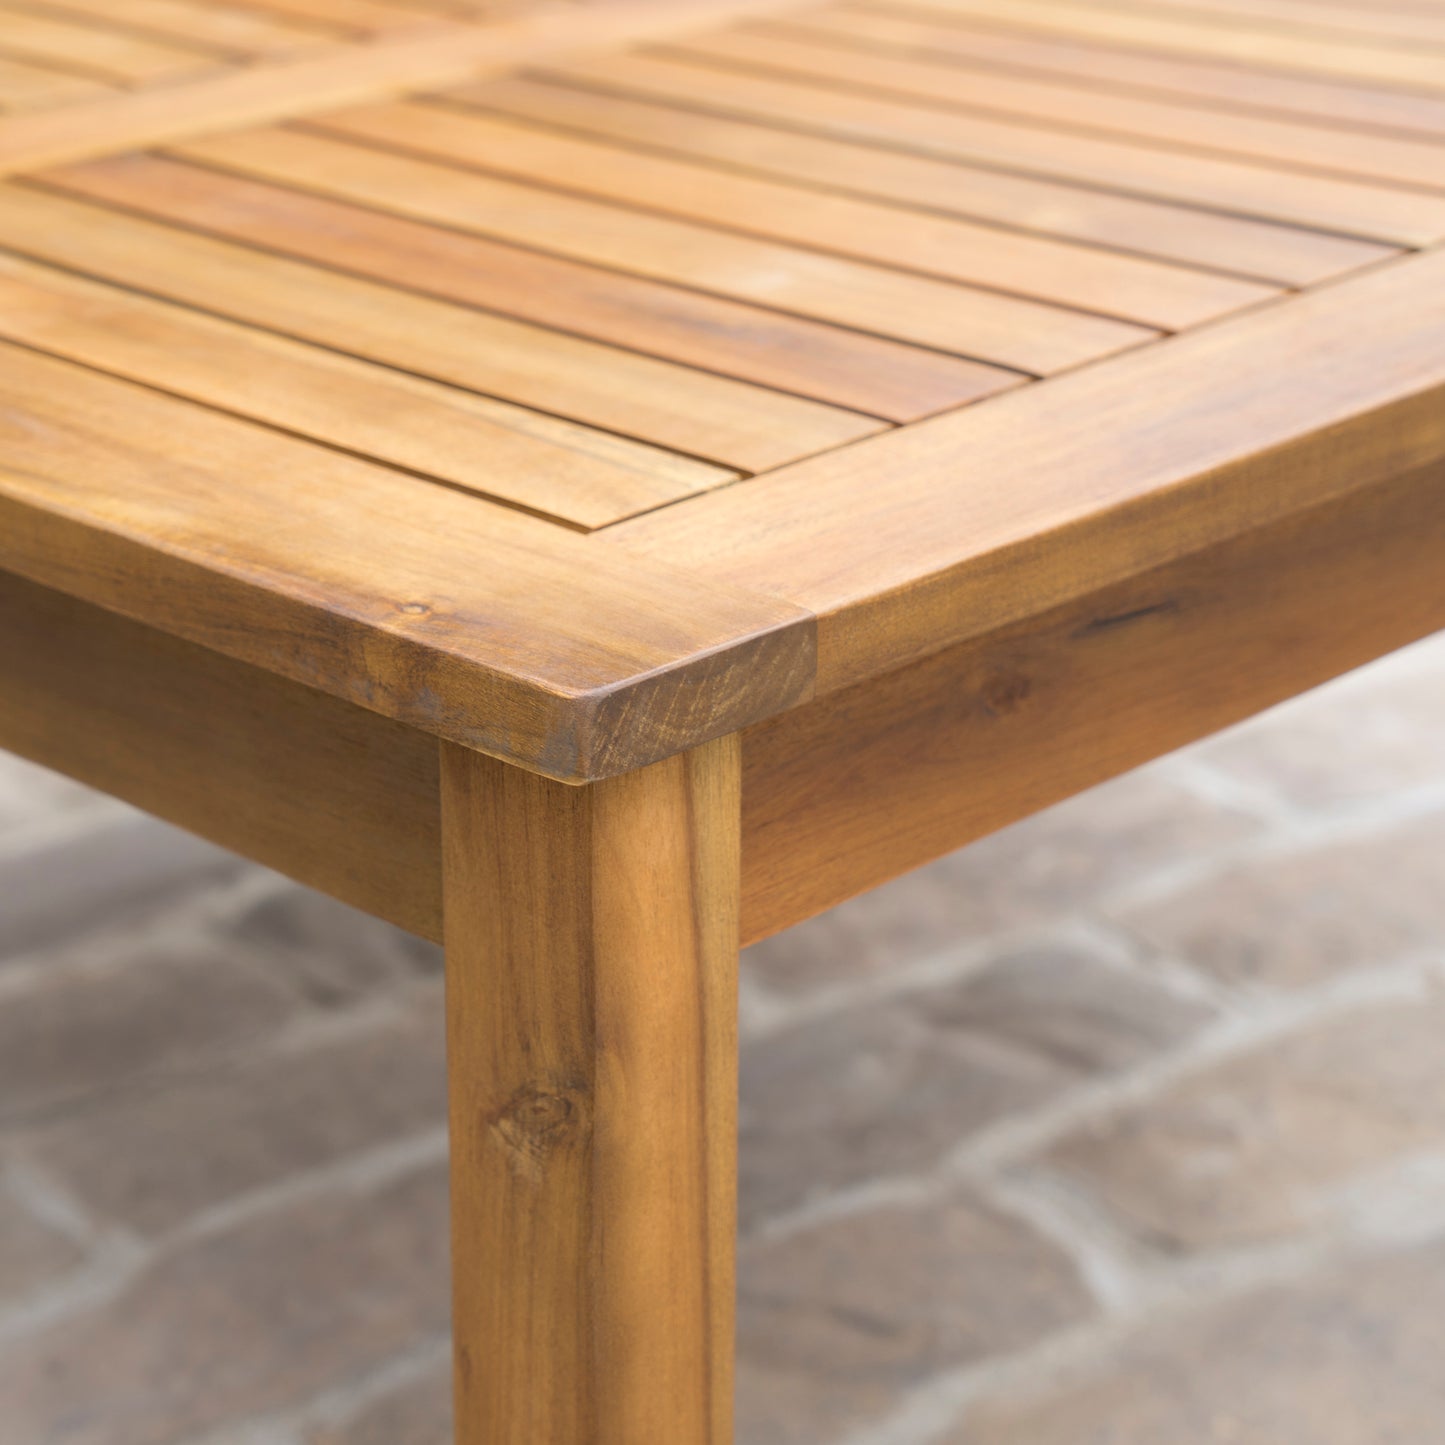 Capri Outdoor Teak Fnished Acacia Wood Coffee Table